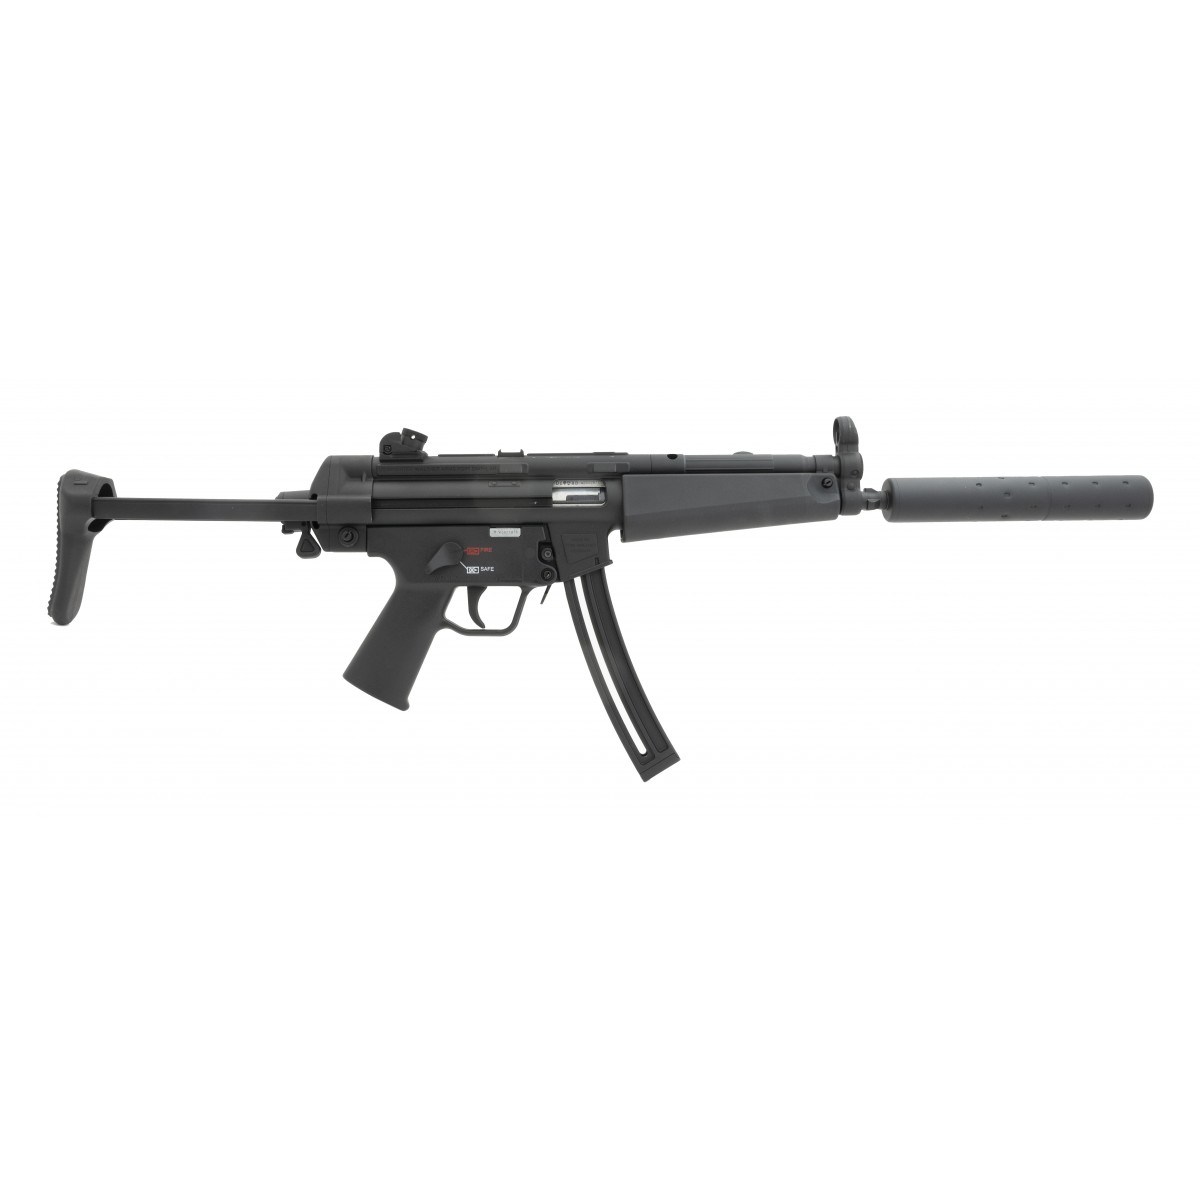 HK MP5 .22 LR caliber rifle for sale.